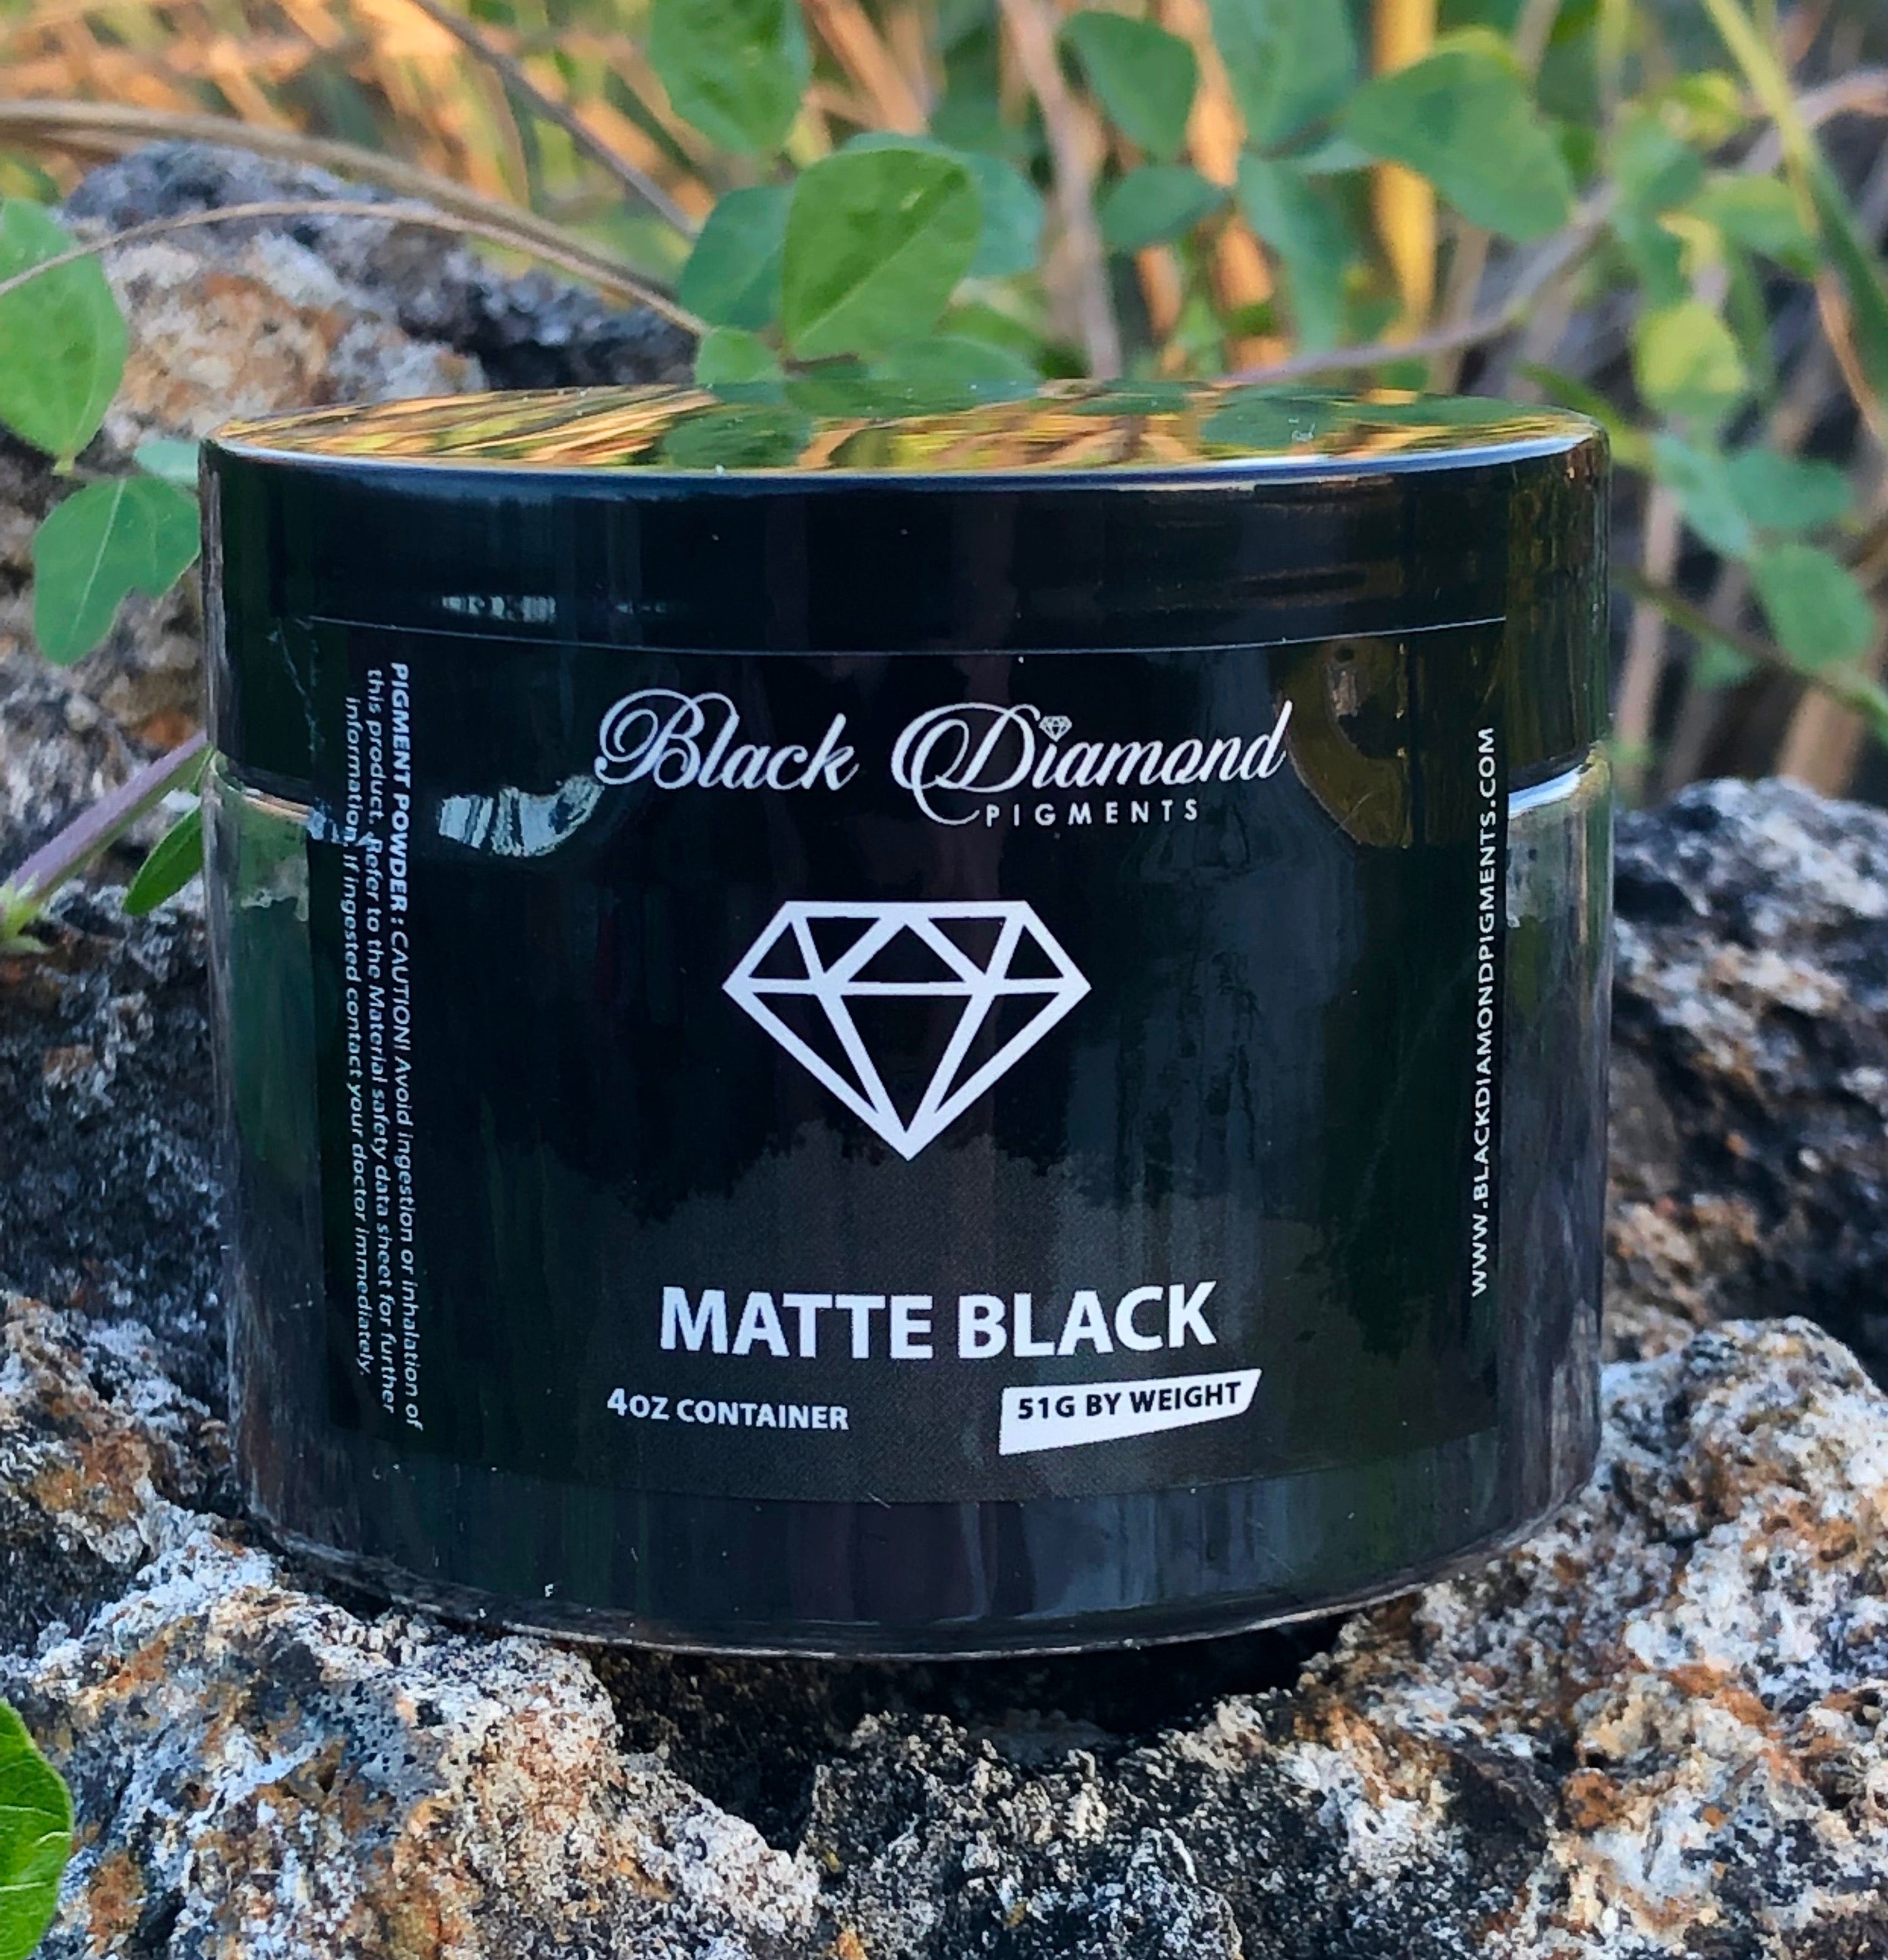 Matte Black - Professional grade mica powder pigment